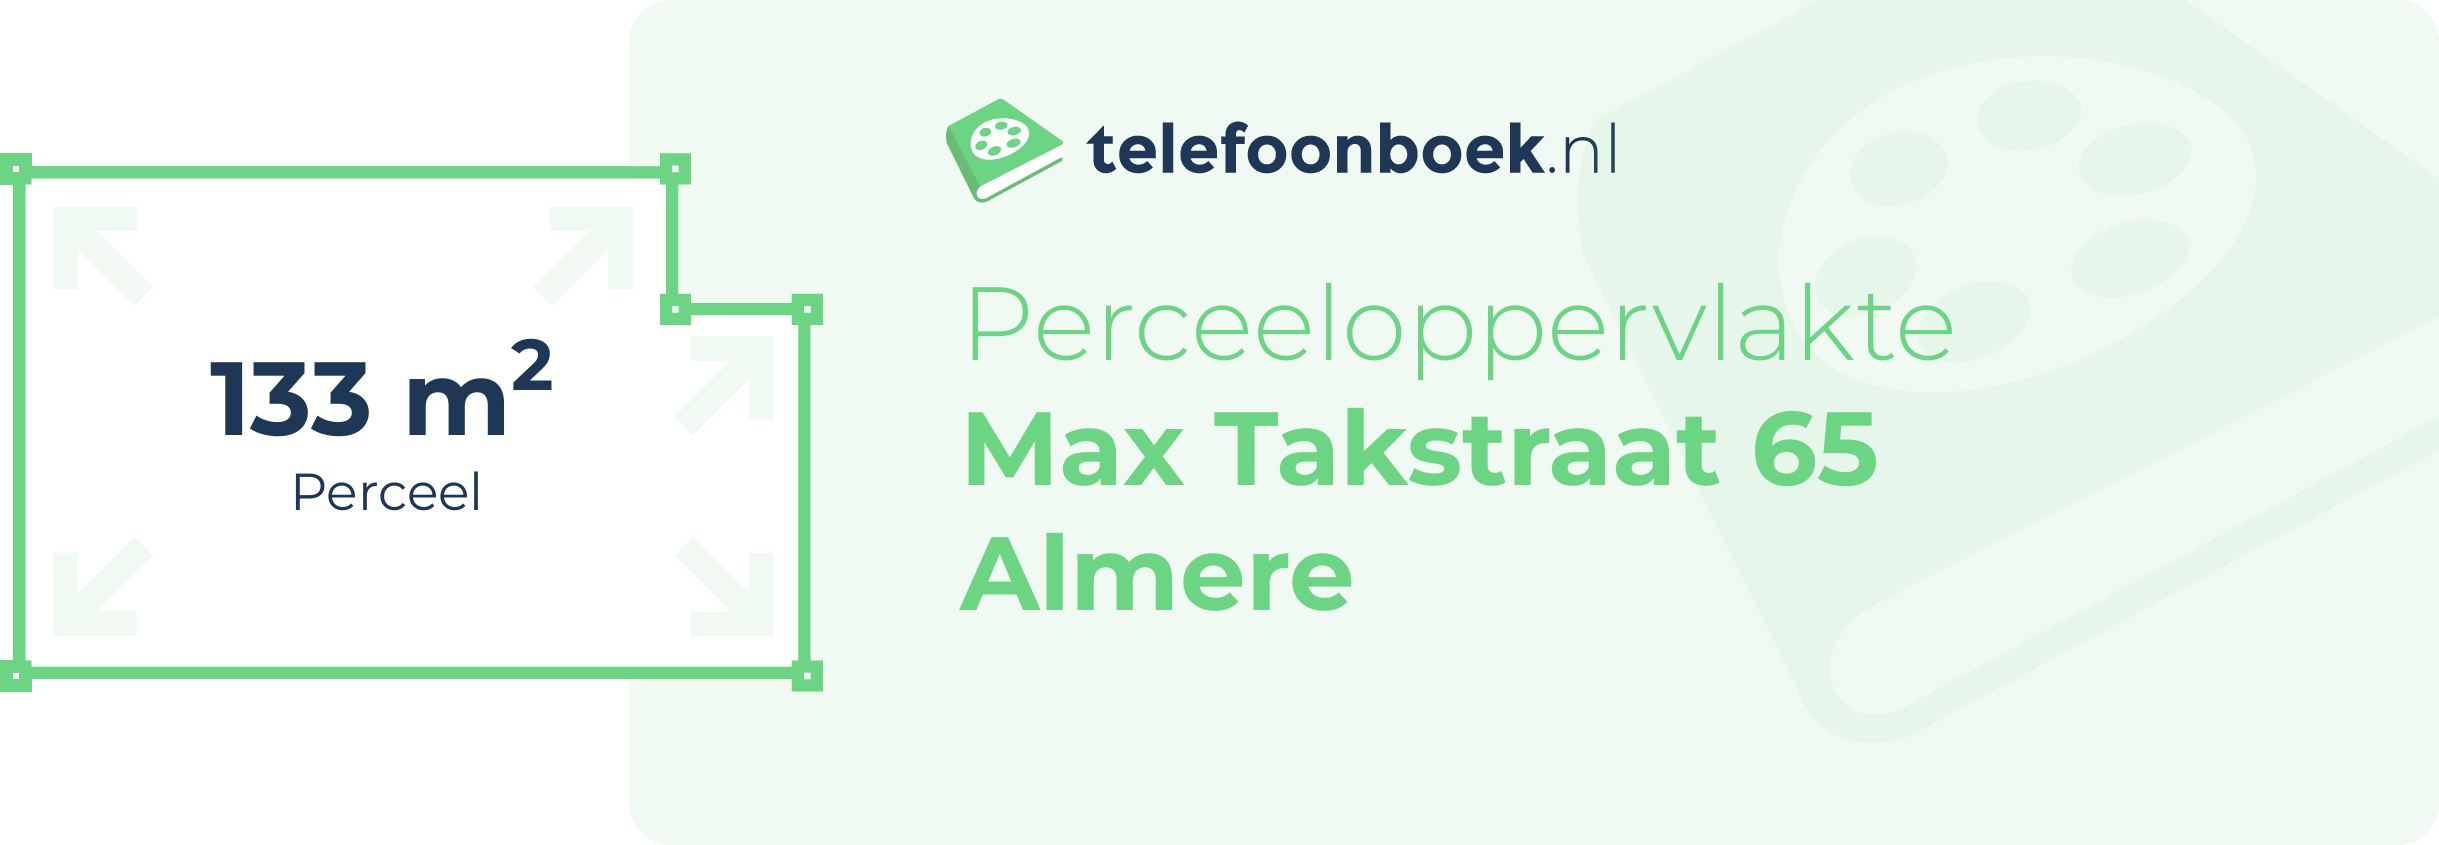 Perceeloppervlakte Max Takstraat 65 Almere